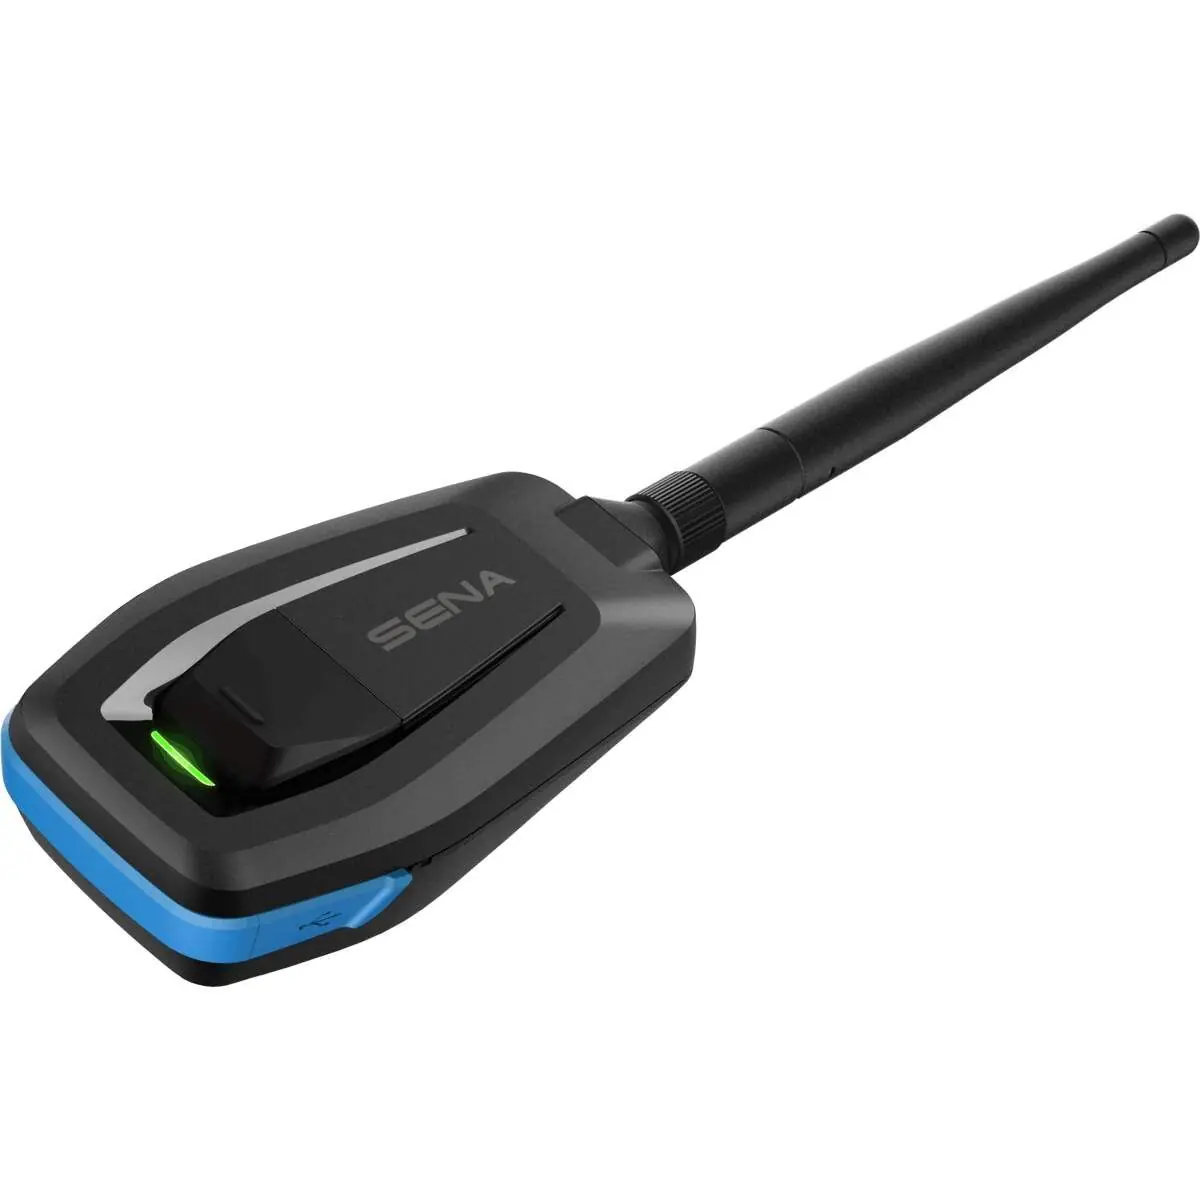 Headset intercom met ruisonderdrukking: Goedkope Mesh Intercom - Sena Meshport Blue